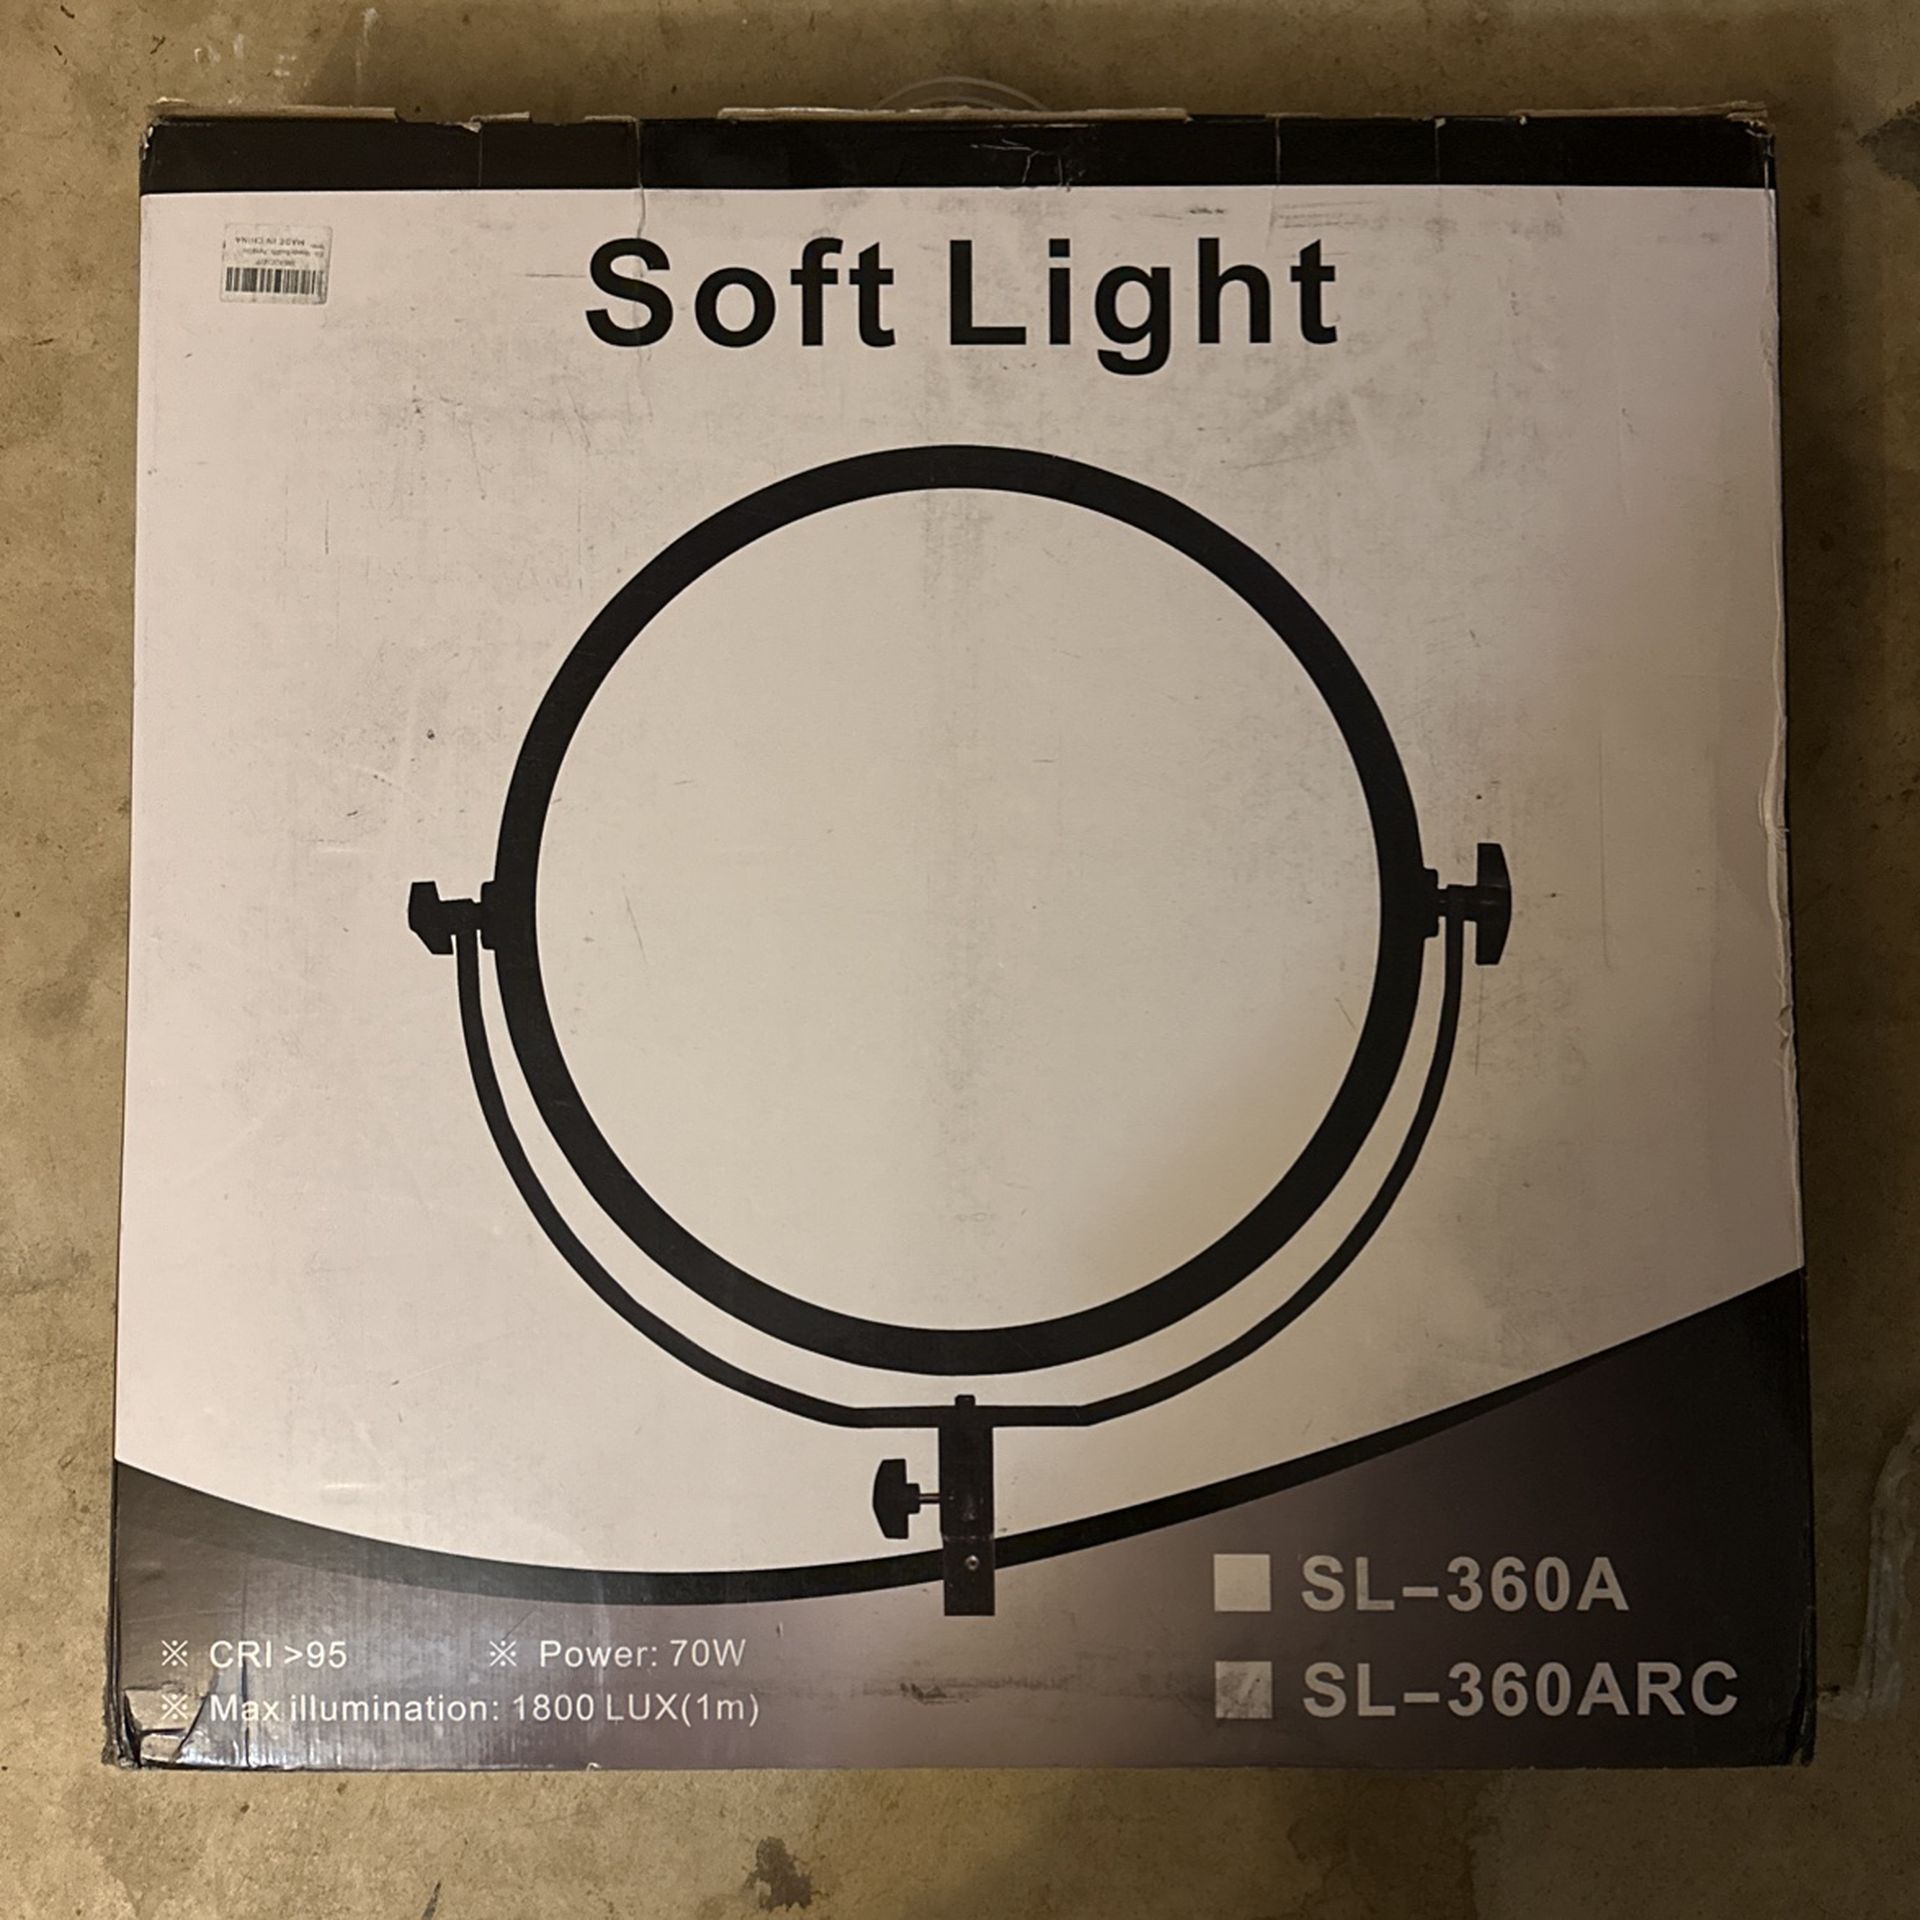 Soft light